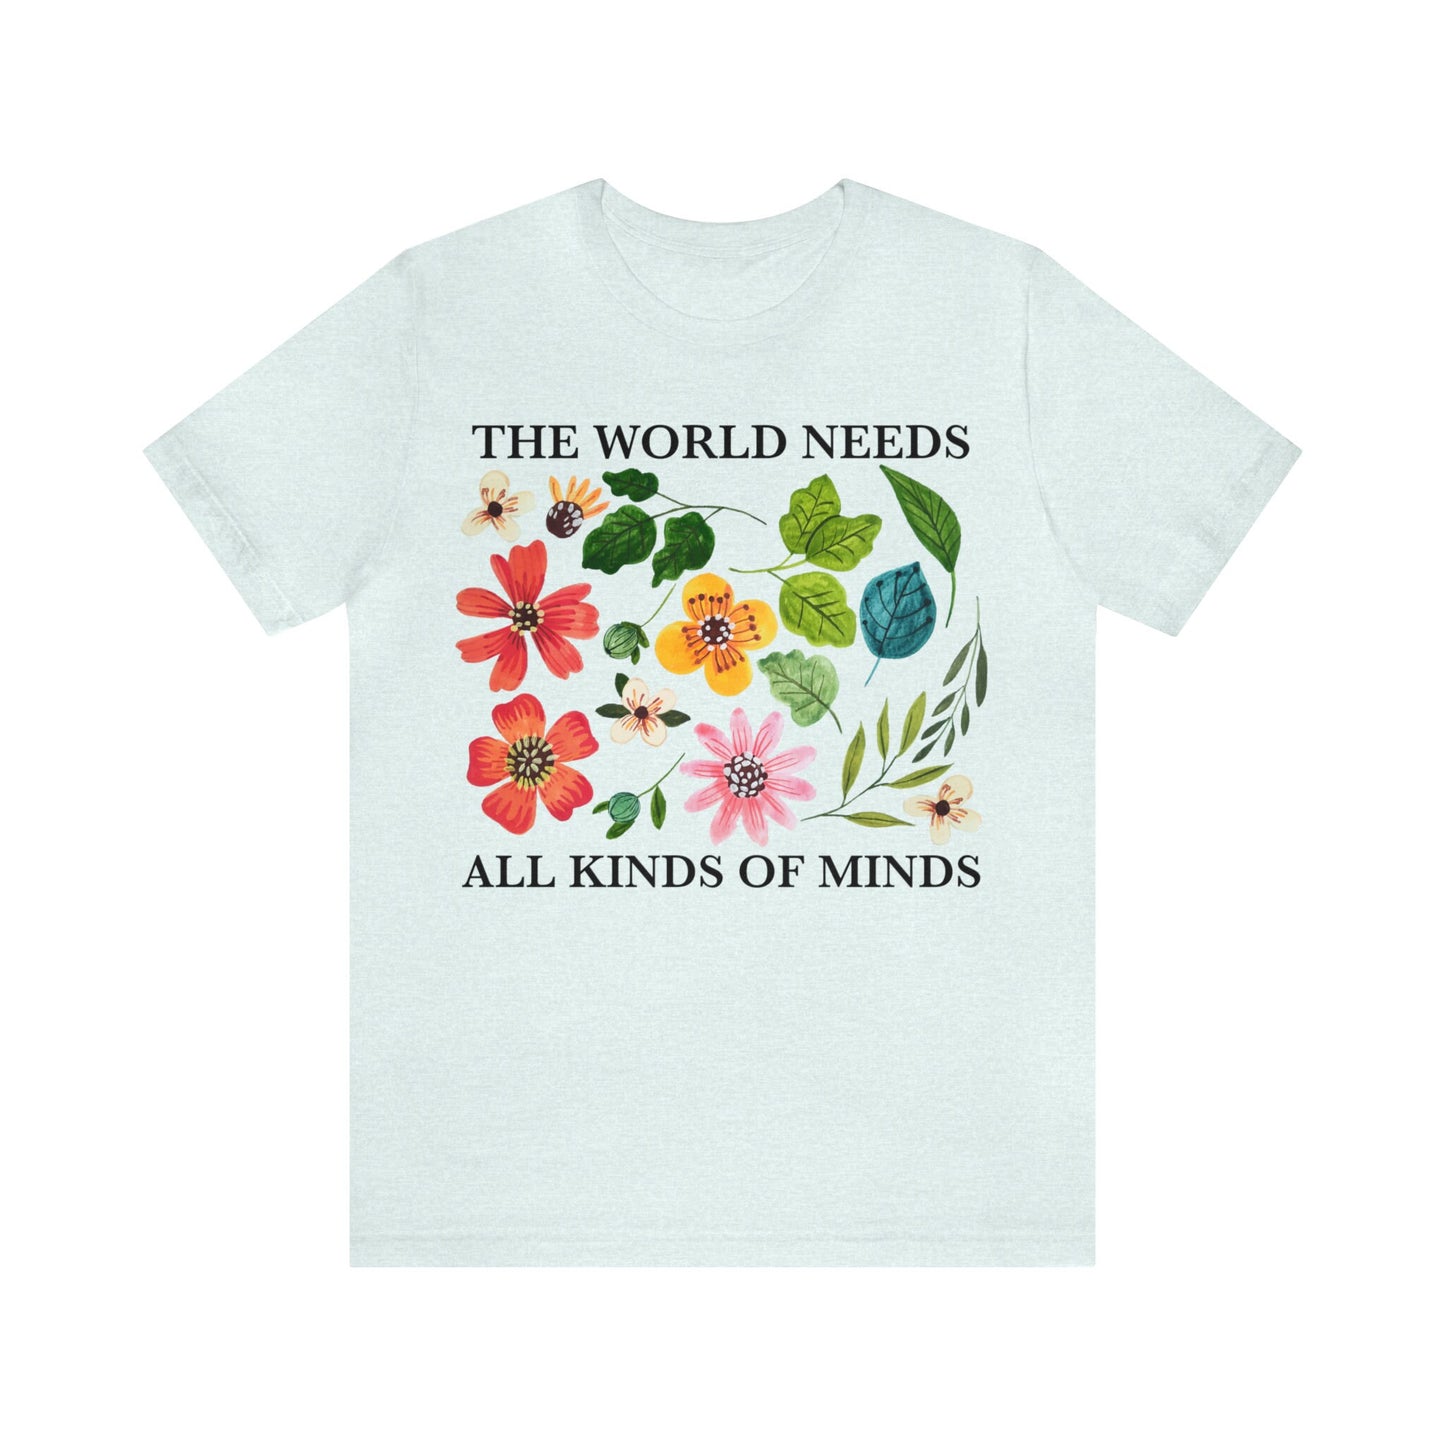 The world needs all kinds of minds shirt